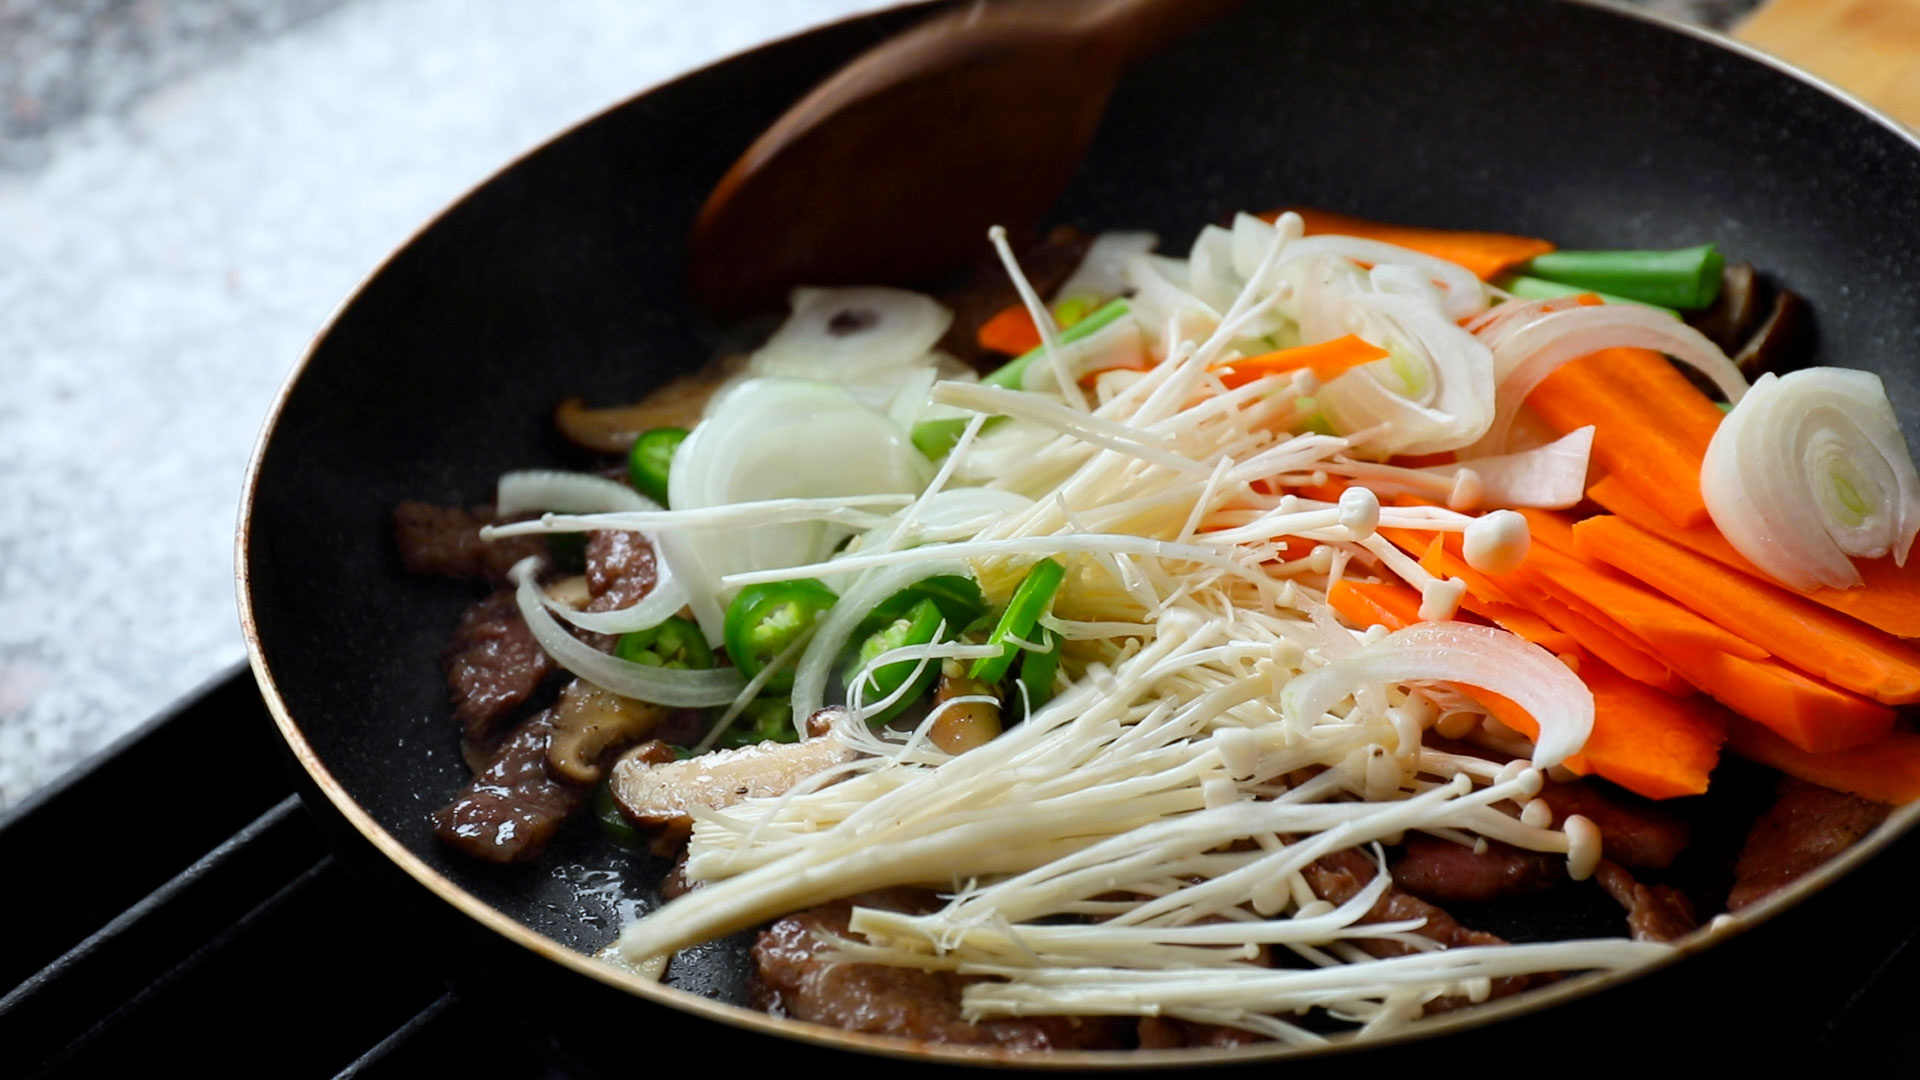 Beef and mushrooms, Stir-fry recipe, Rice bowl, Korean cuisine, 1920x1080 Full HD Desktop